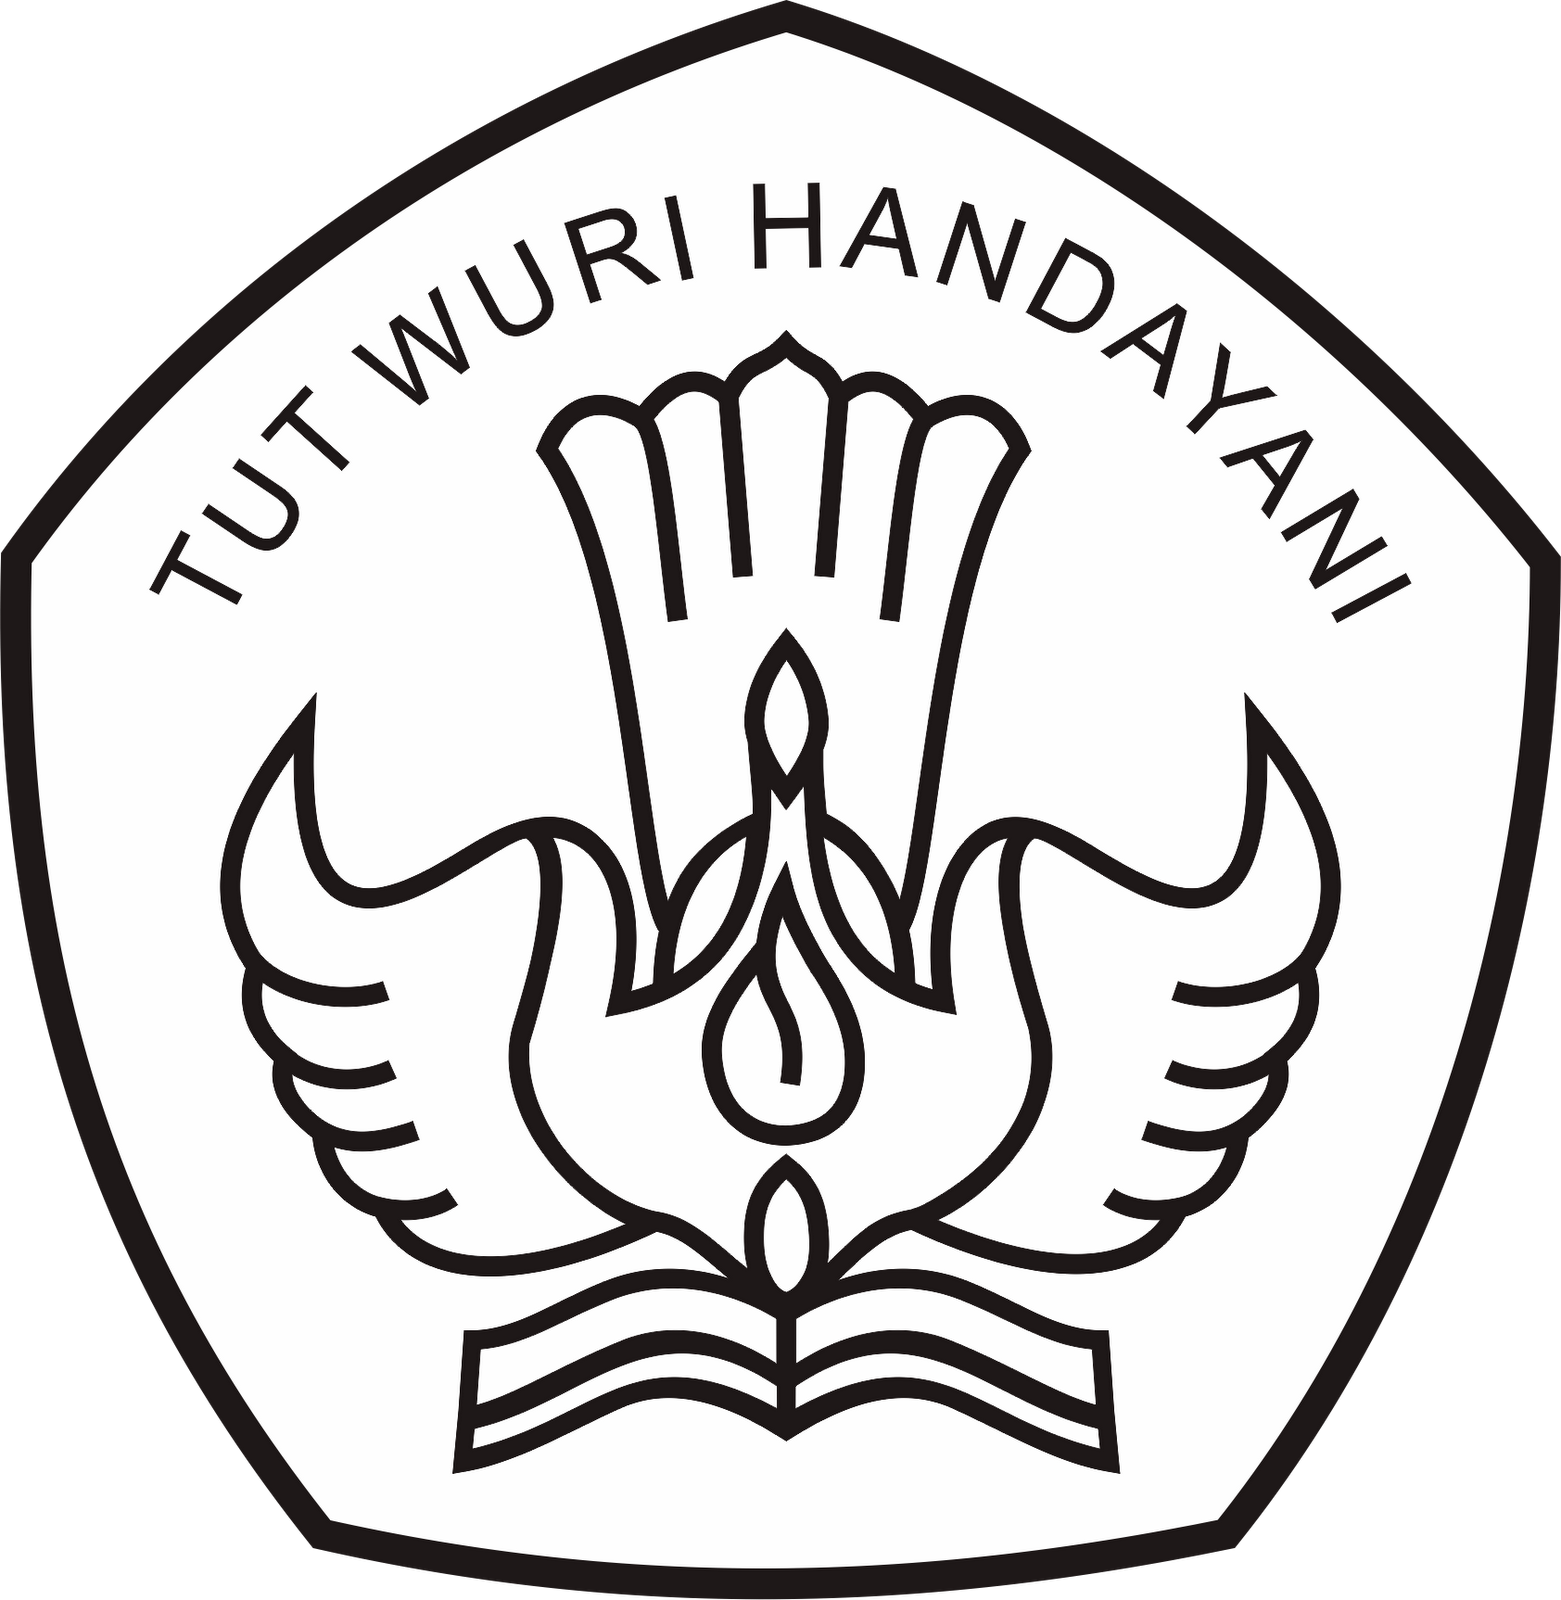 Logo Tut Wuri Handayani Sesuai Kemdikbud Vector Cdr P Vrogue Co